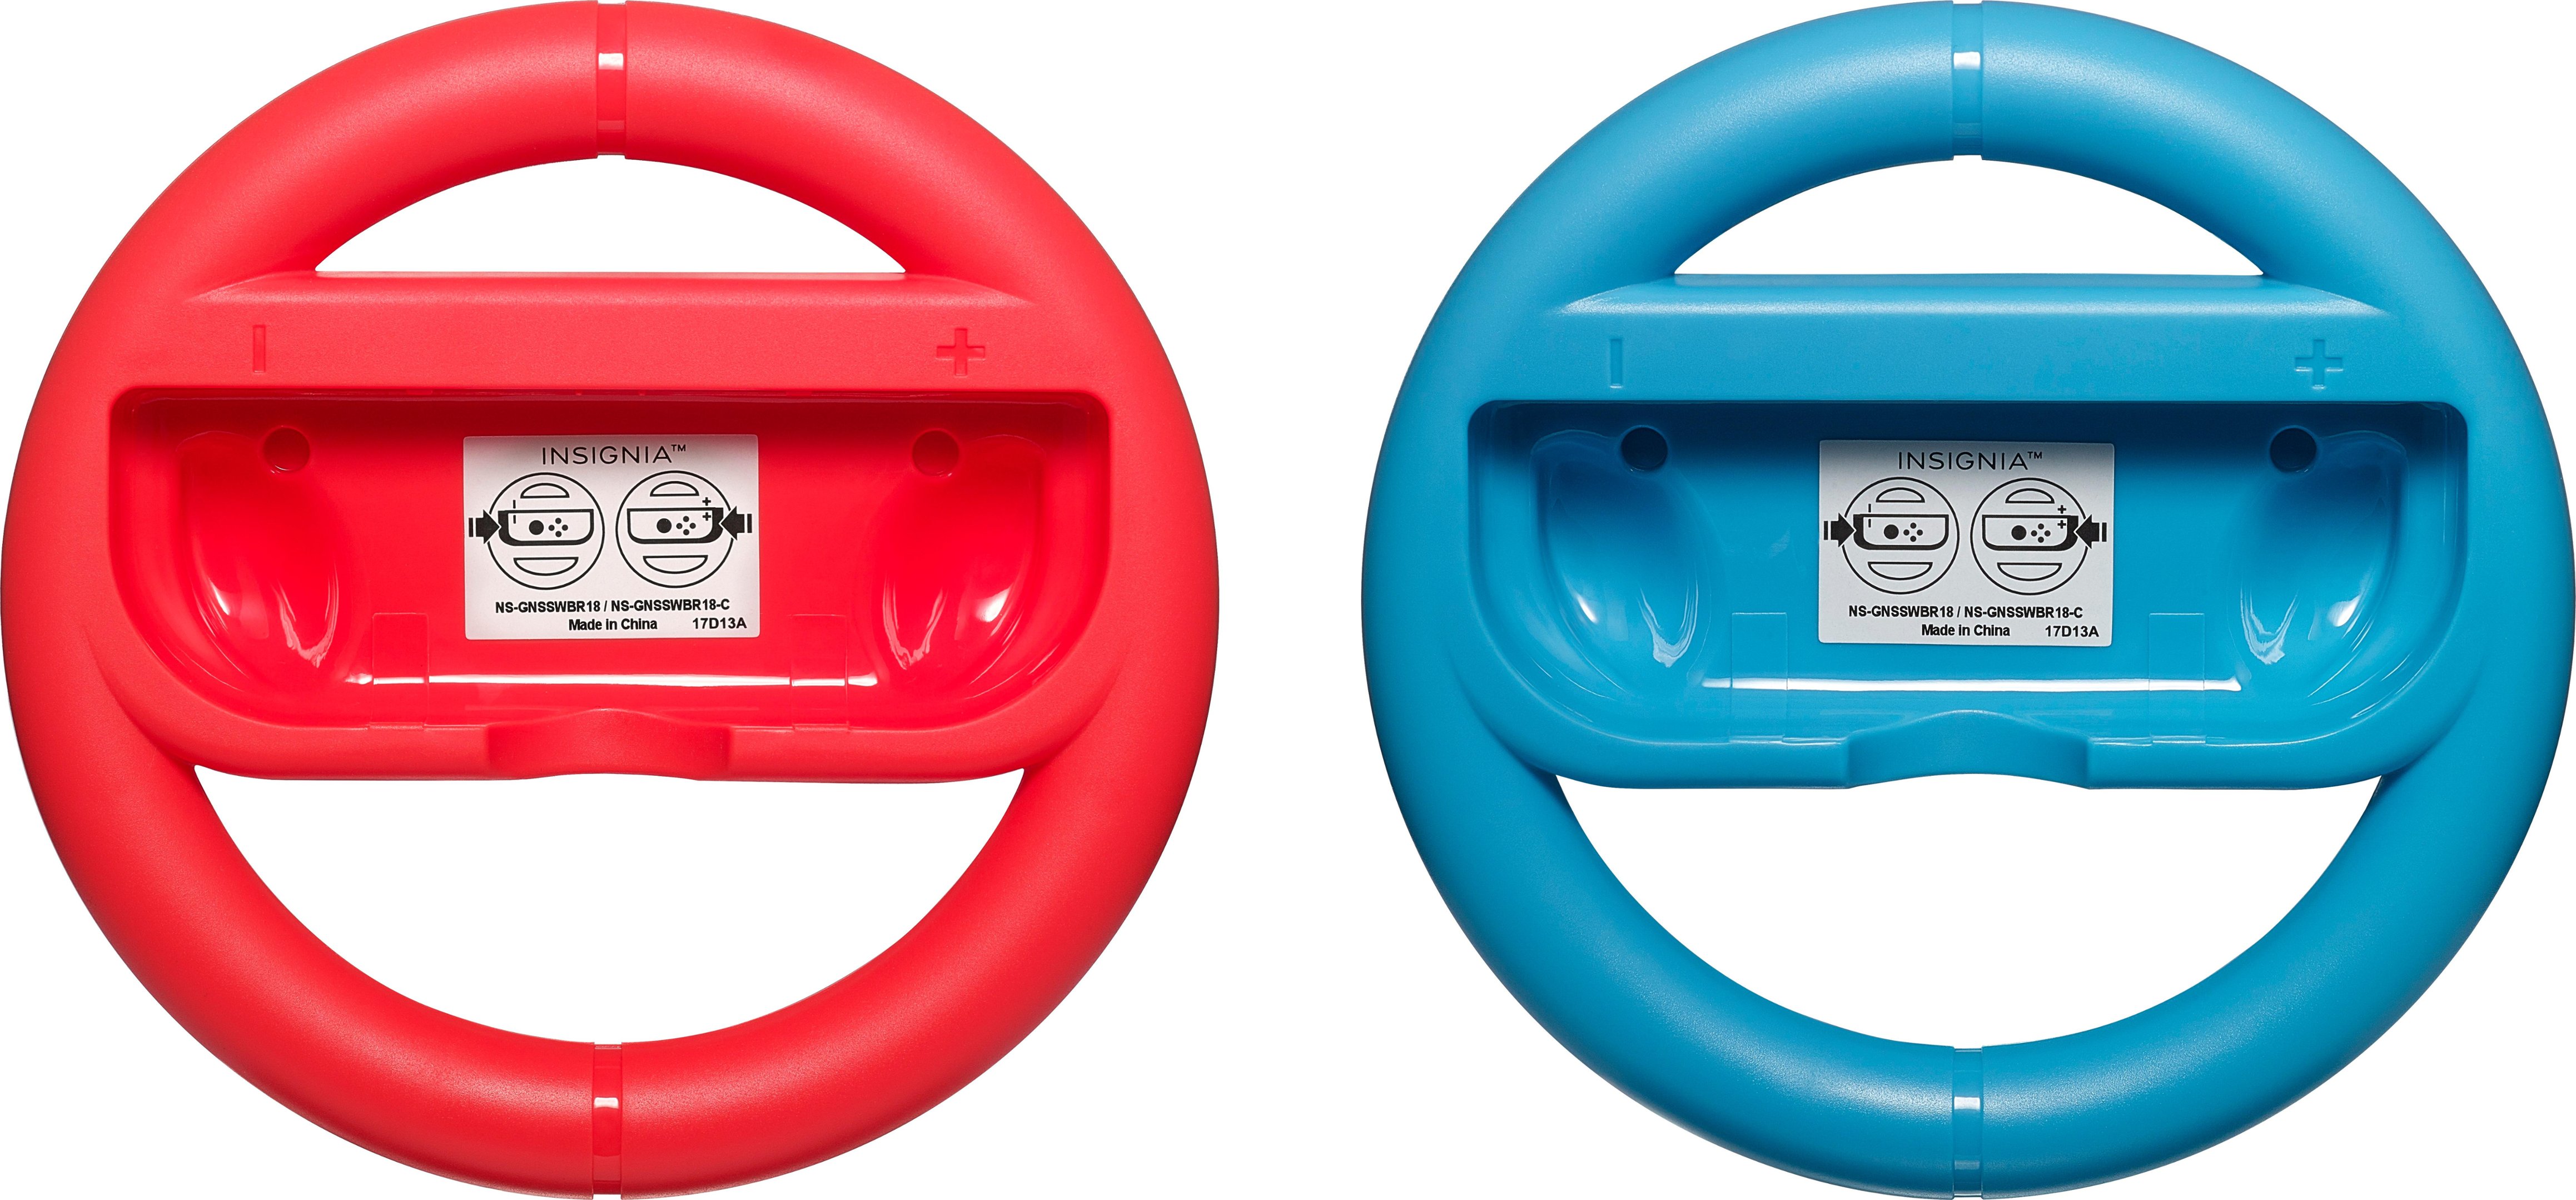 Insignia™ Wheel Best for red/Neon Joy-Con Switch Buy: Nintendo (2-Pack) NS-GNSSWBR18 Neon Blue